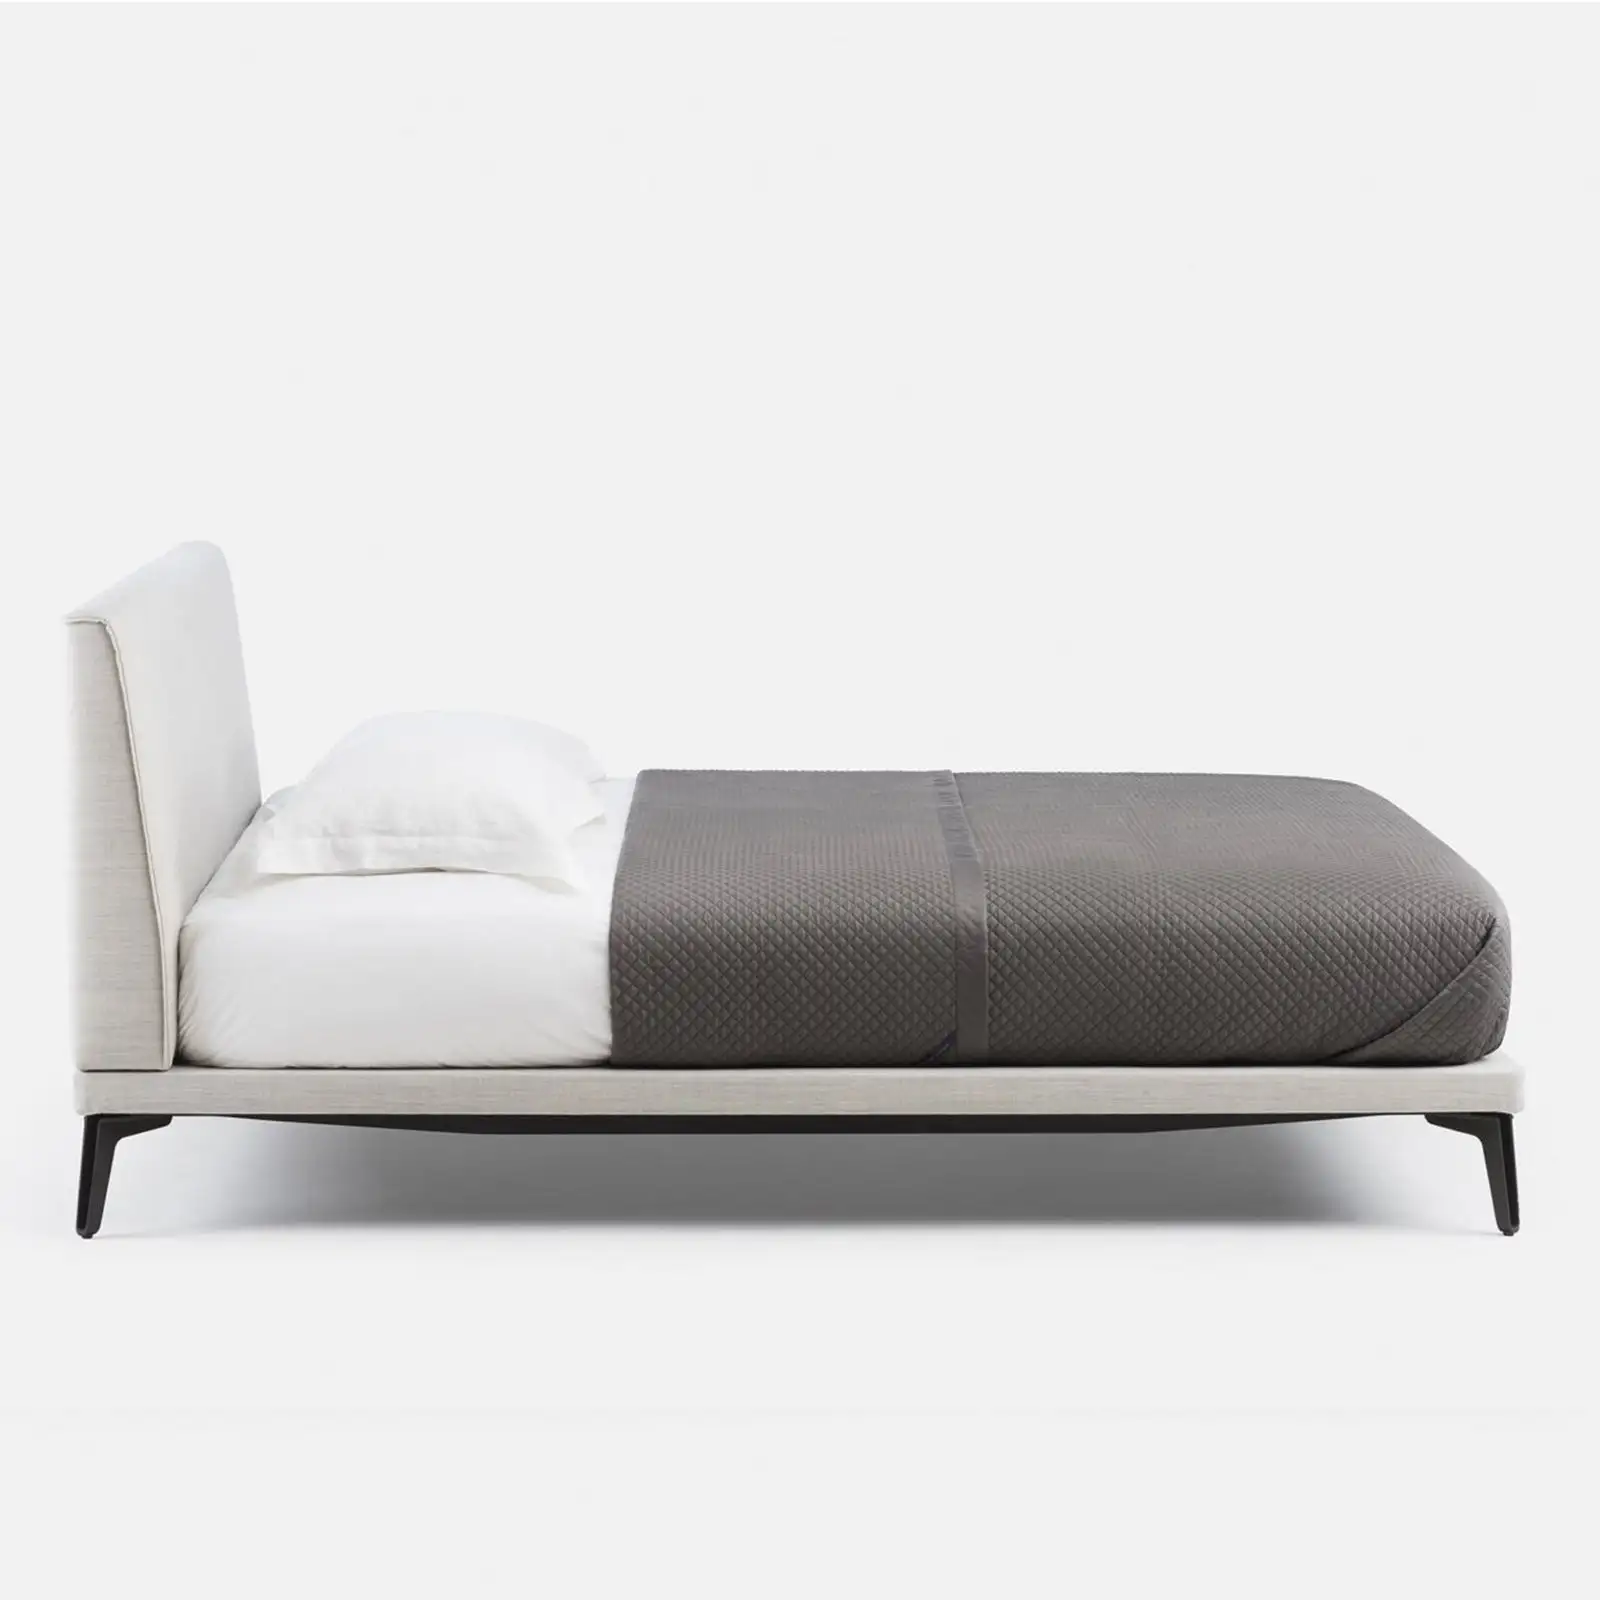 Cama de tecido estofada moderna e minimalista, conjunto de quarto king size, cama queen, mobília para casa, camas de madeira